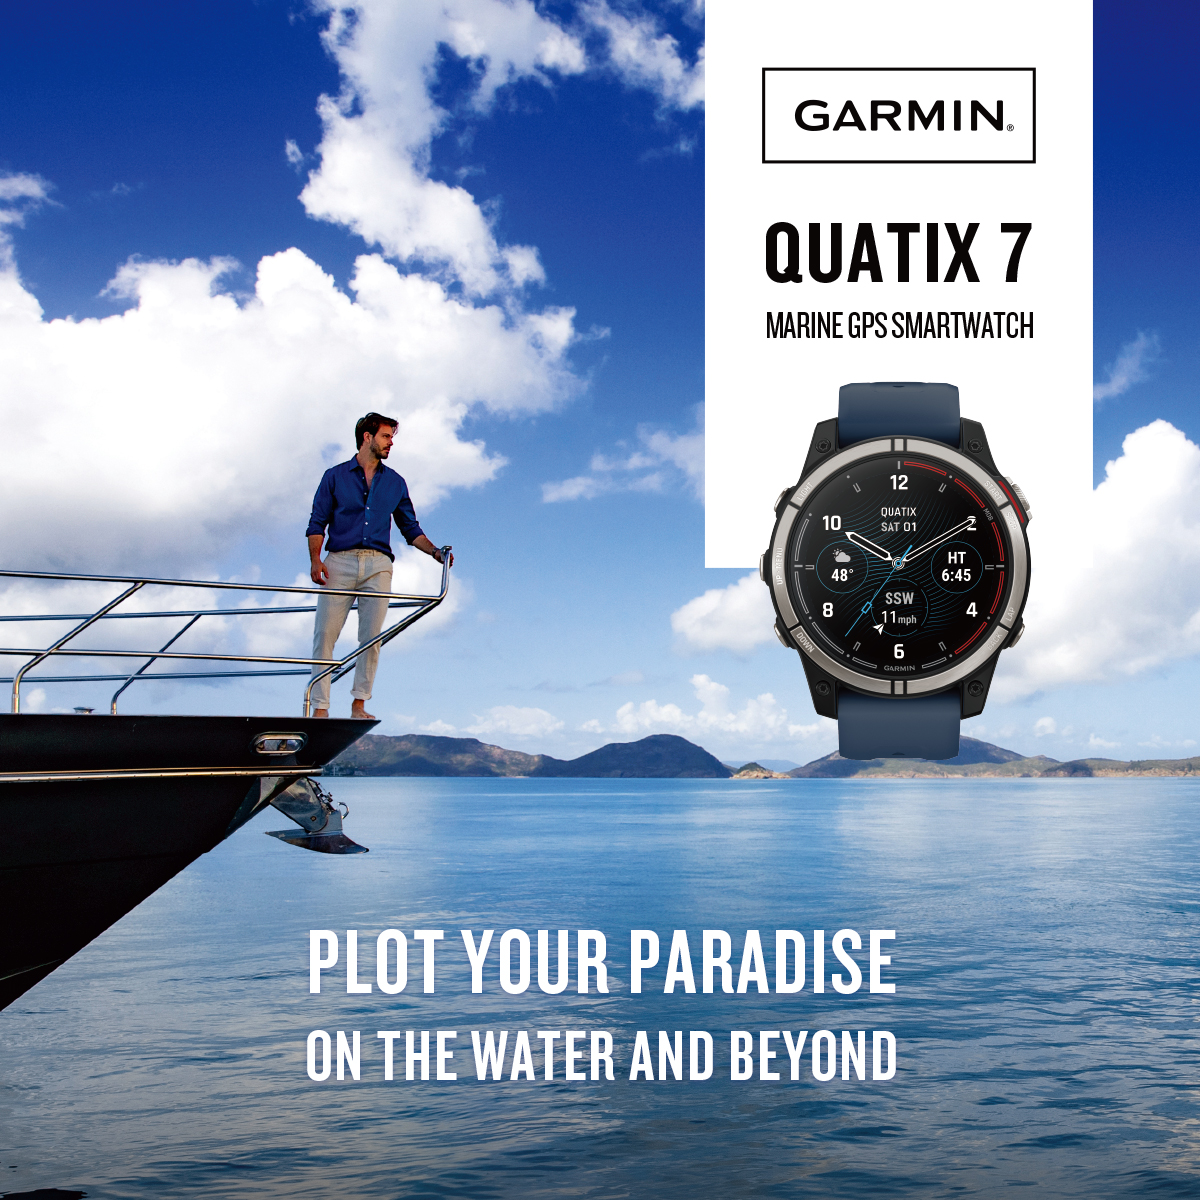 Garmin quatix7 – the marine GPS smartwatch